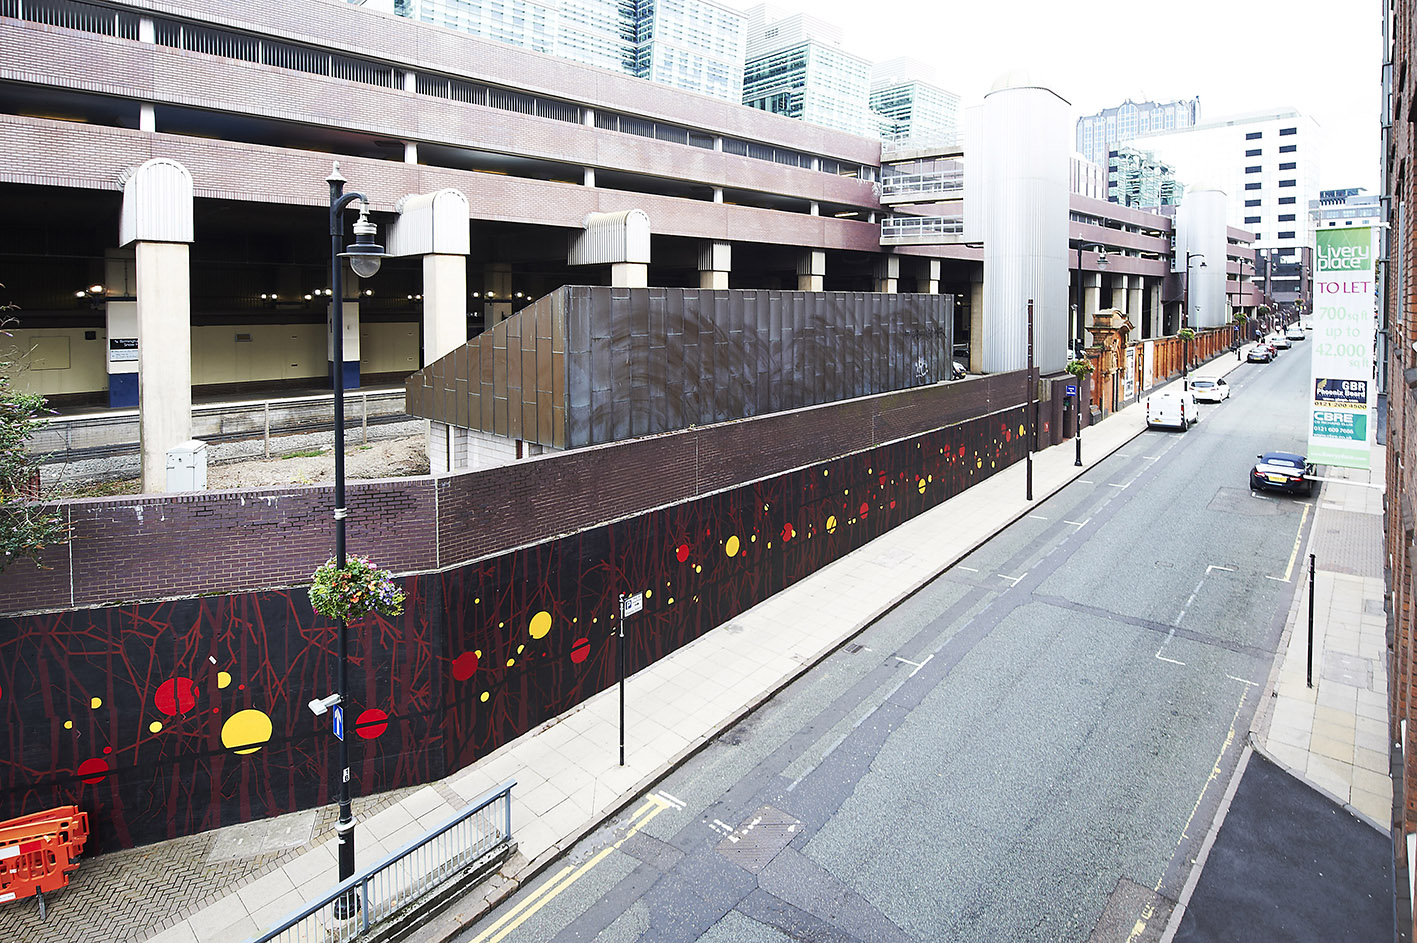 Birmingham contemporary art commission